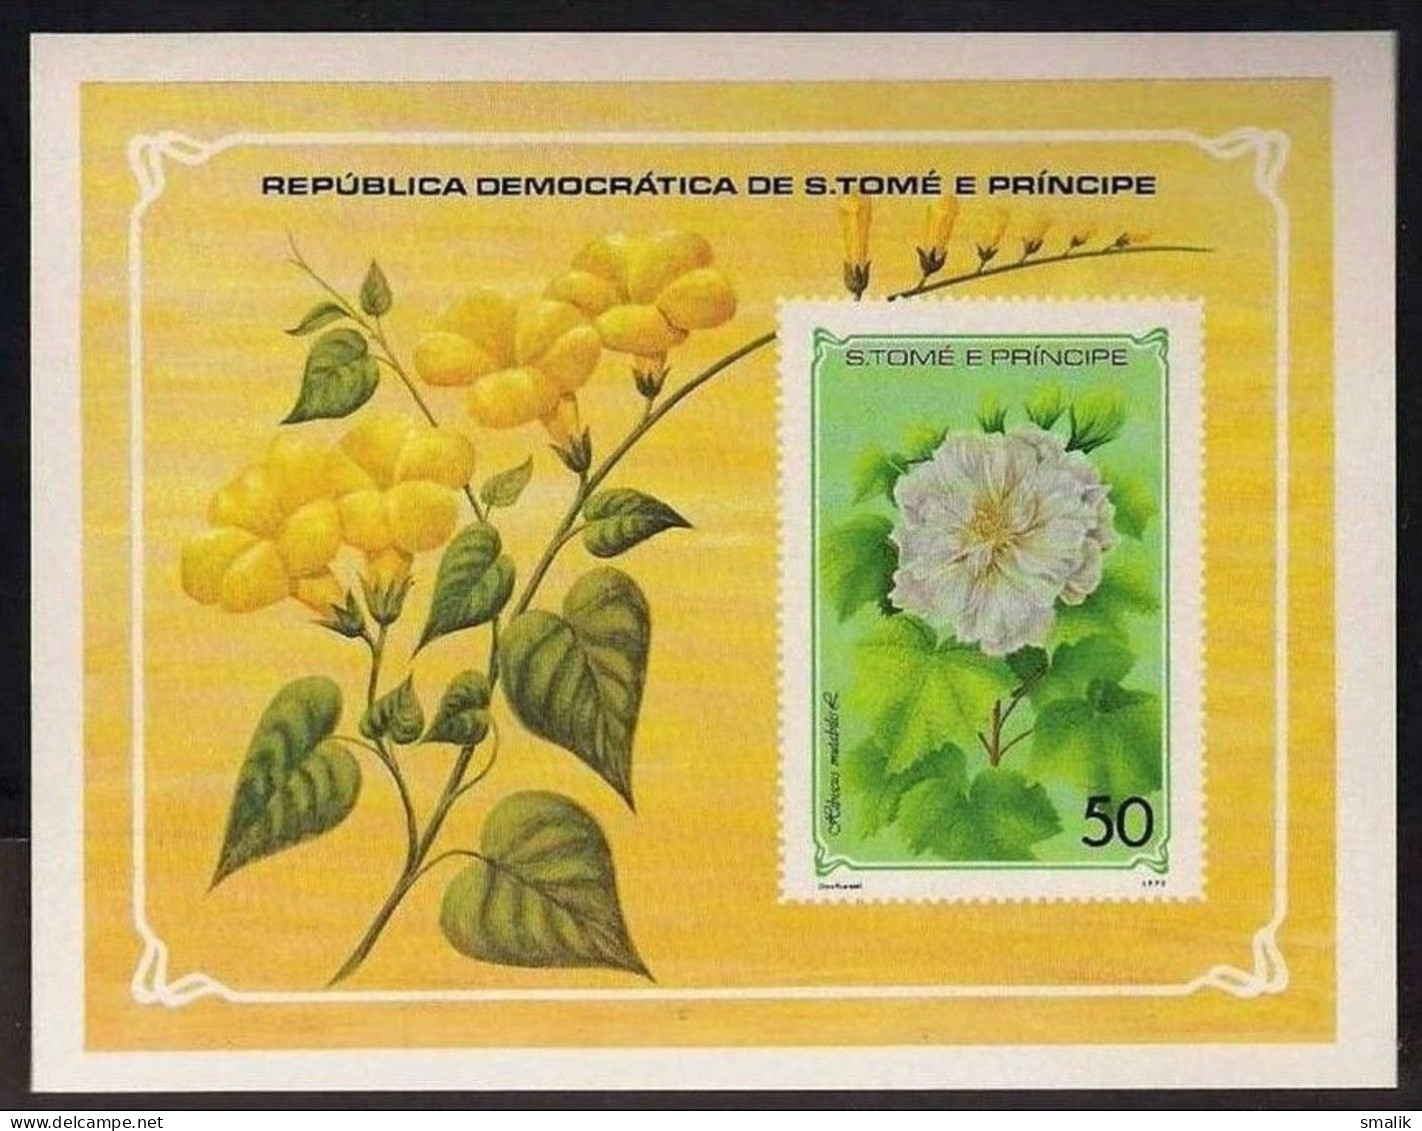 S. TOME E PRINCIPE SAO 1979 - Hibiscus Flowers, Plants, IMPERF Miniature Sheet, MNH - Sao Tome Et Principe